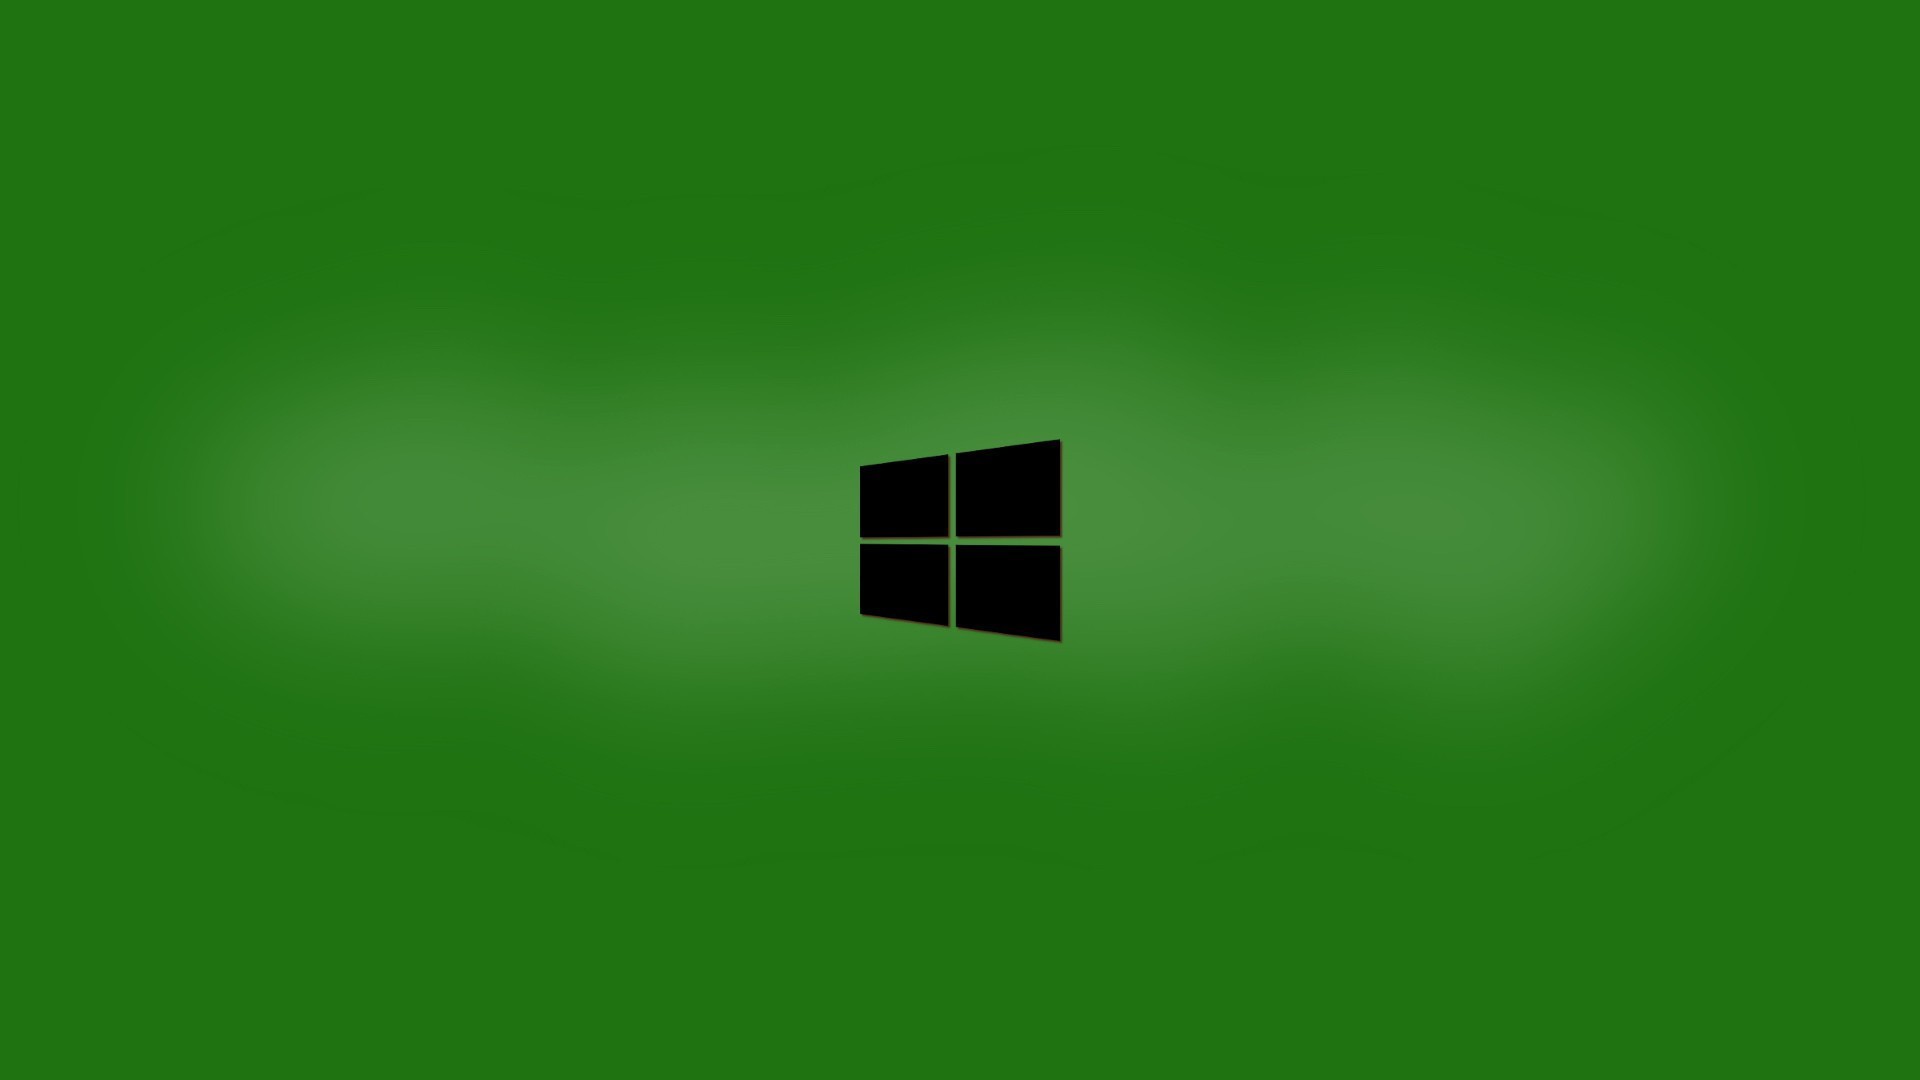 1920x1080 Windows 10 - Green wallpaper  | Landscape - TÃ¡jkÃ©p - Photography -  FotÃ³grÃ¡fia | Pinterest | Green wallpaper and Windows 10